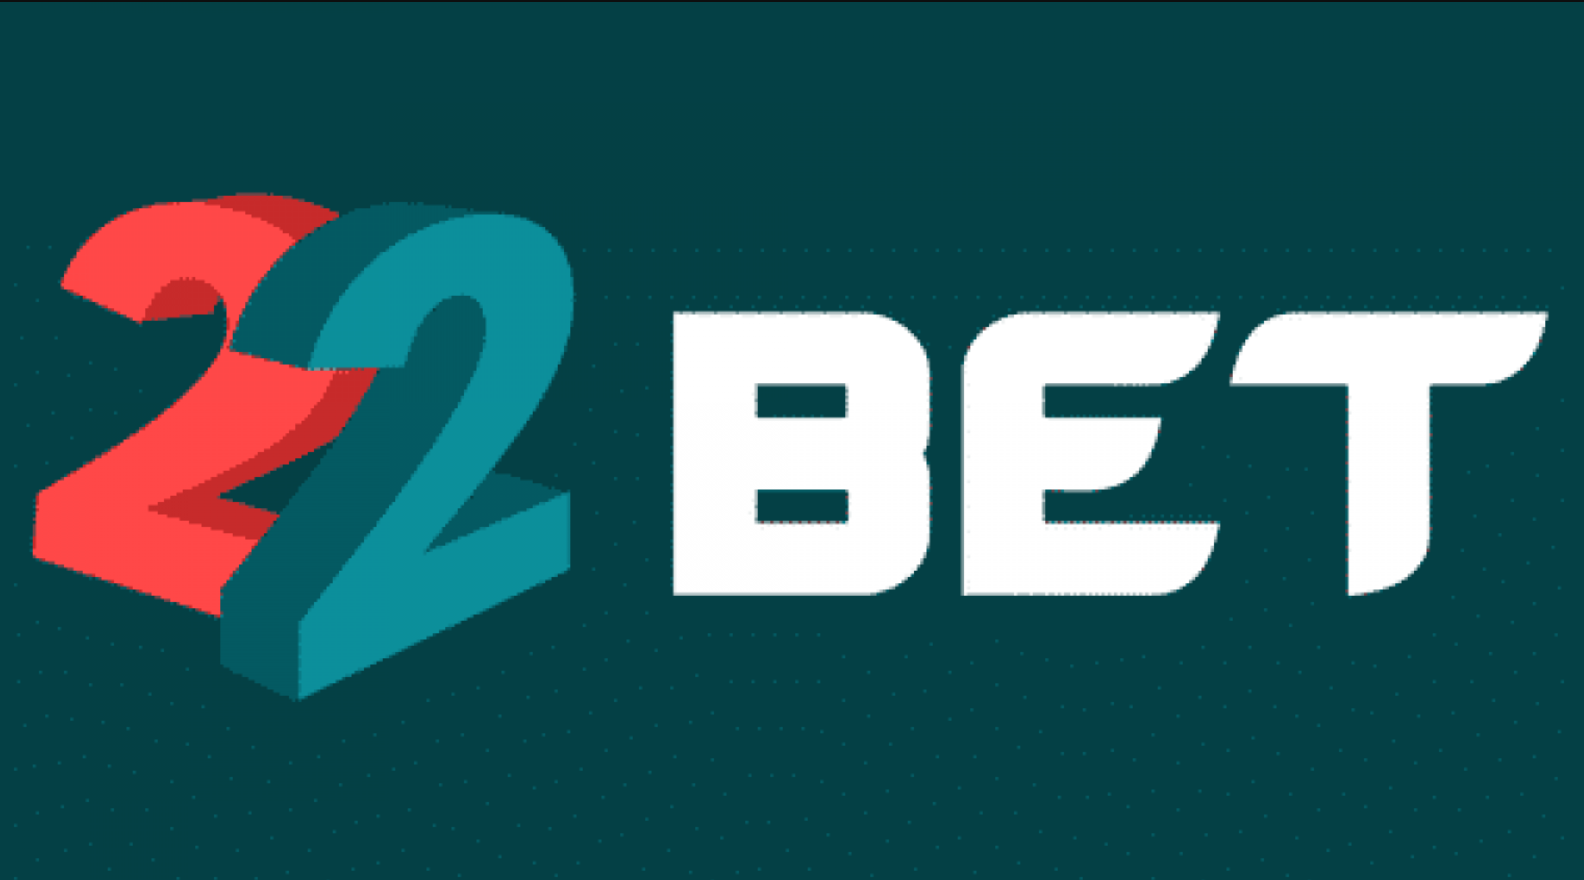 22Bet Bangladesh promo code features